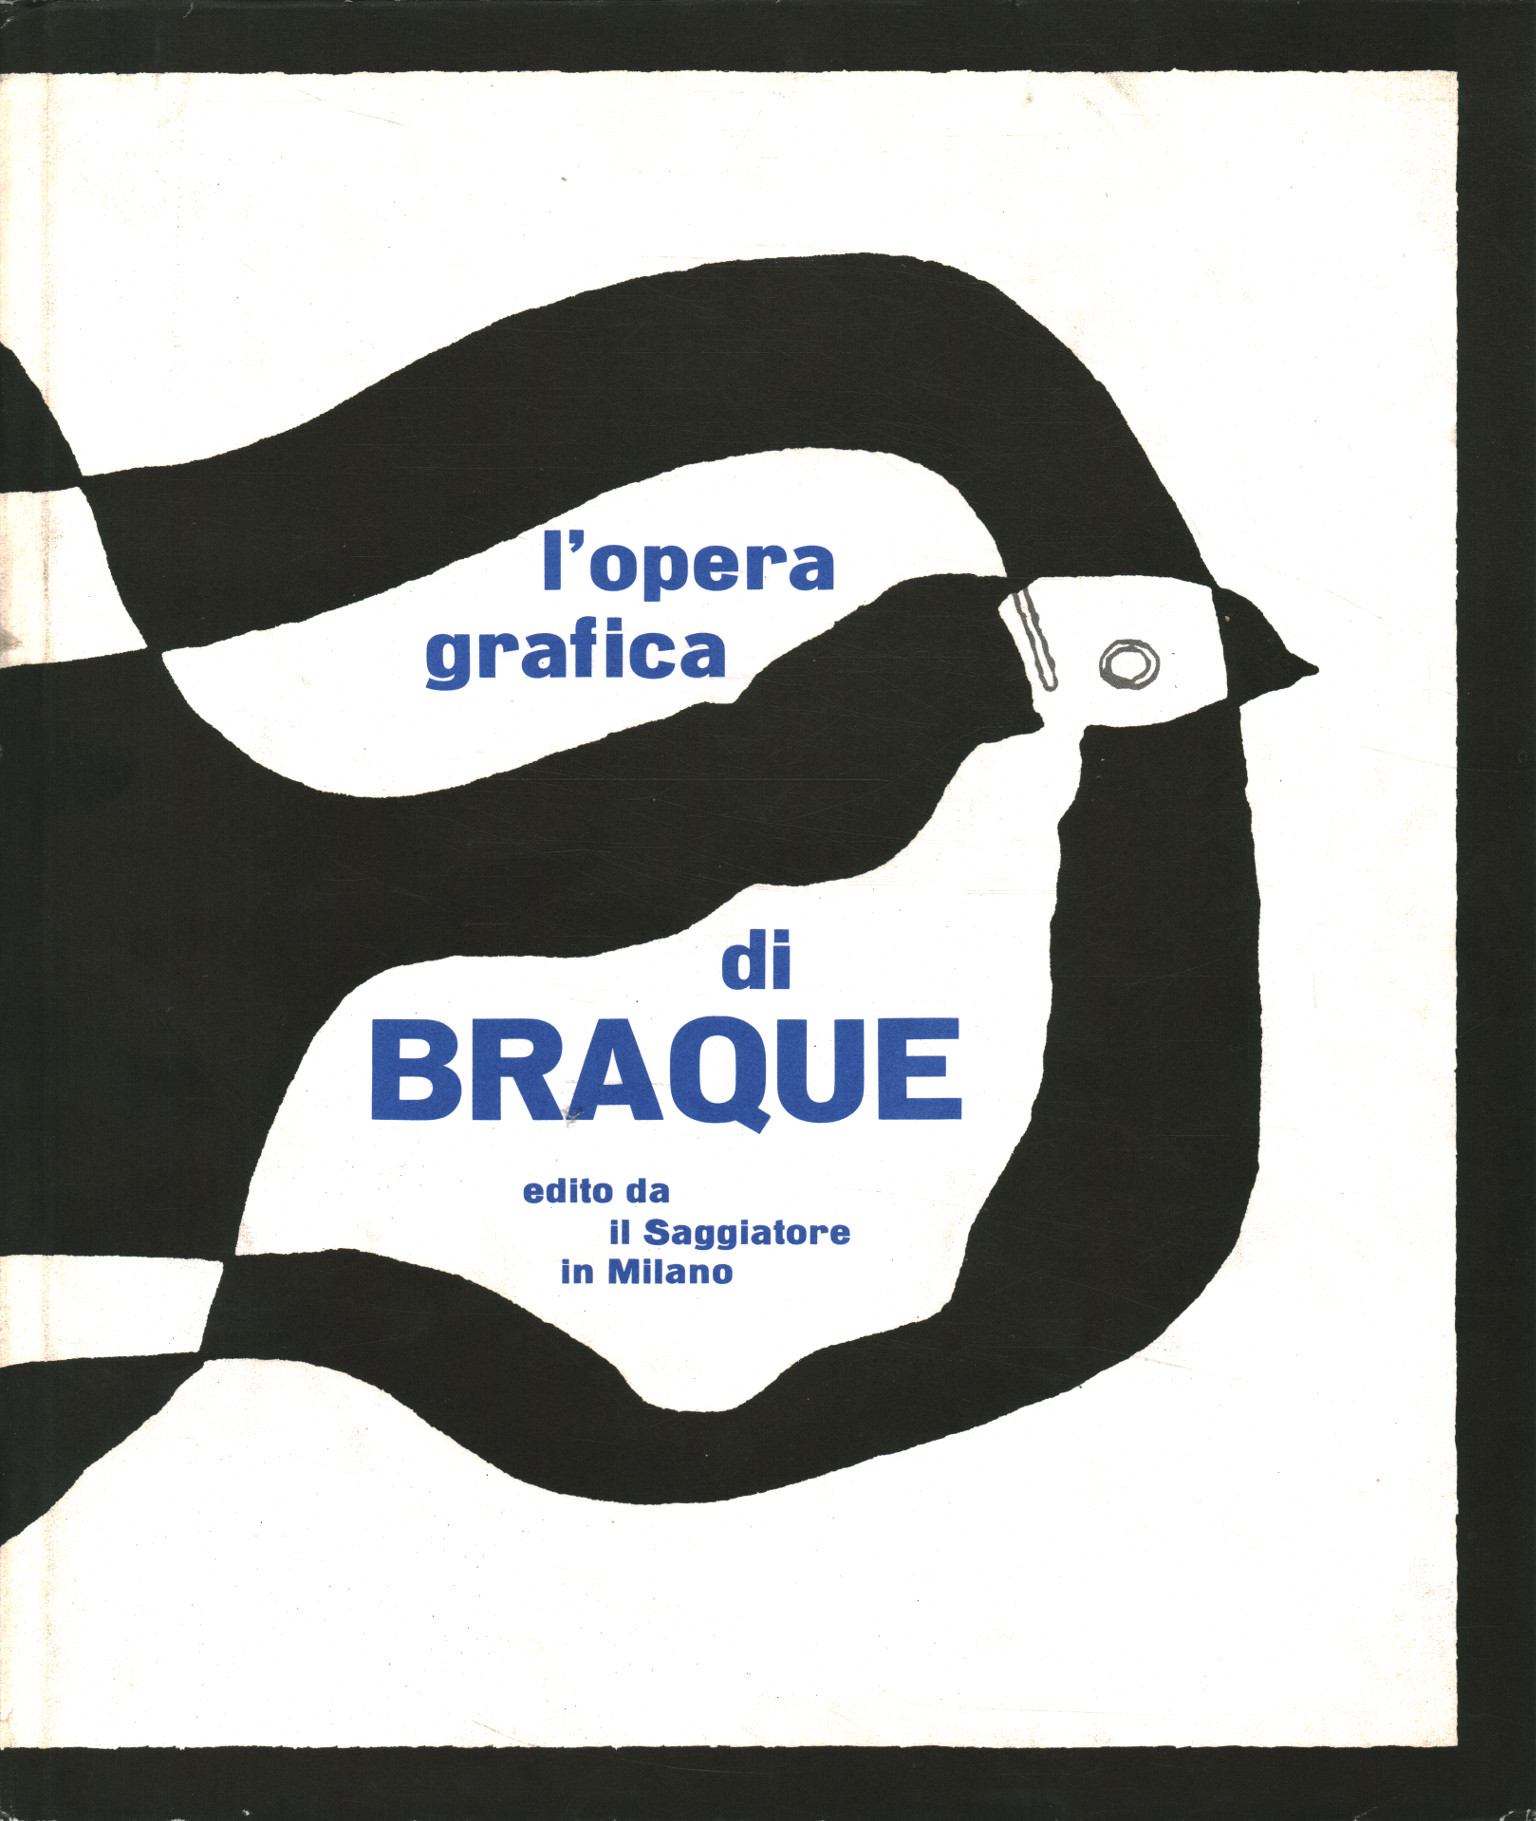 Jorge Braque. la obra grafica